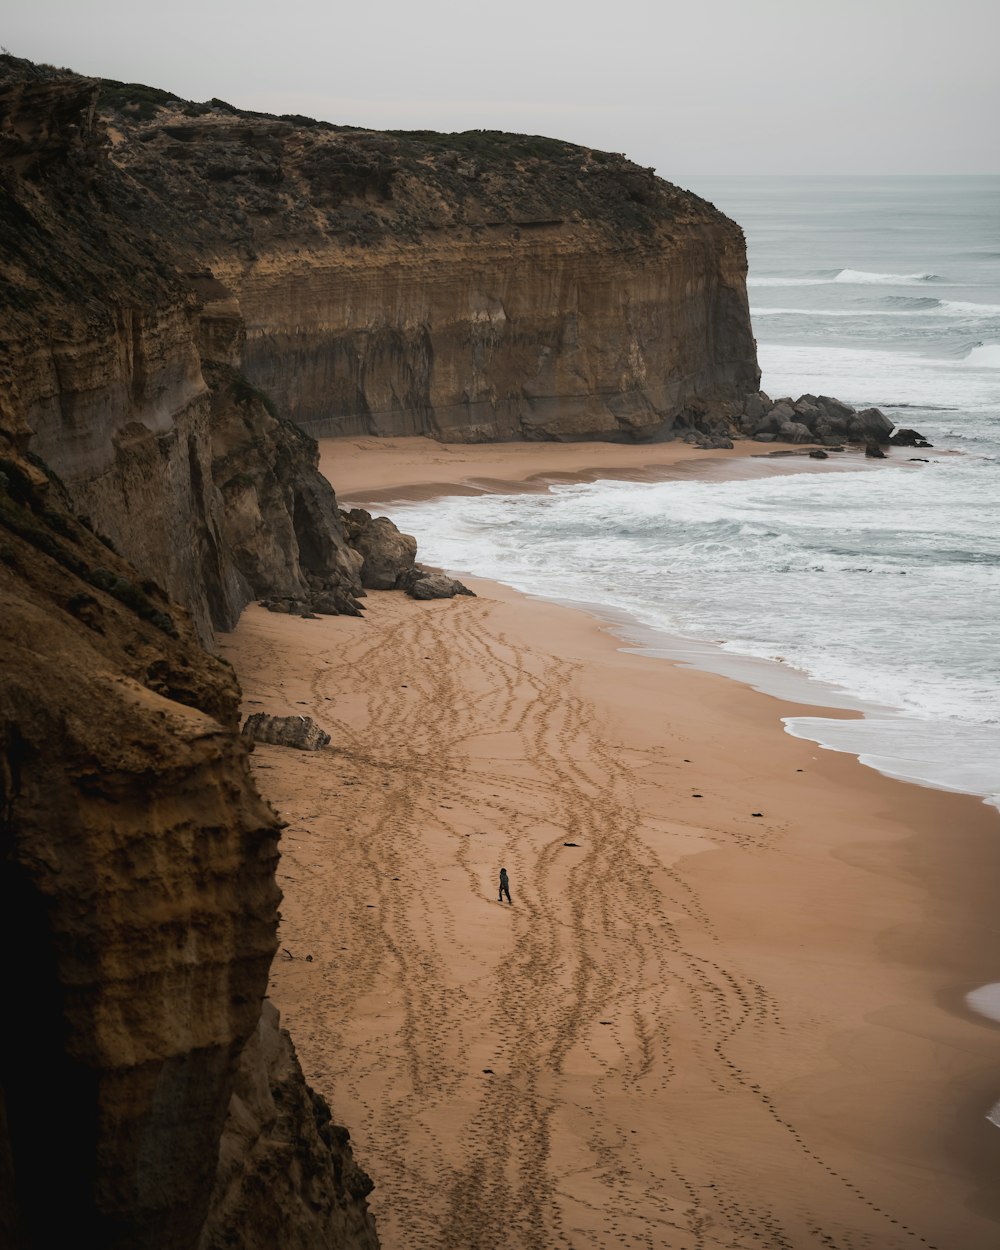 a person walking along a sandy beach next to the ocean